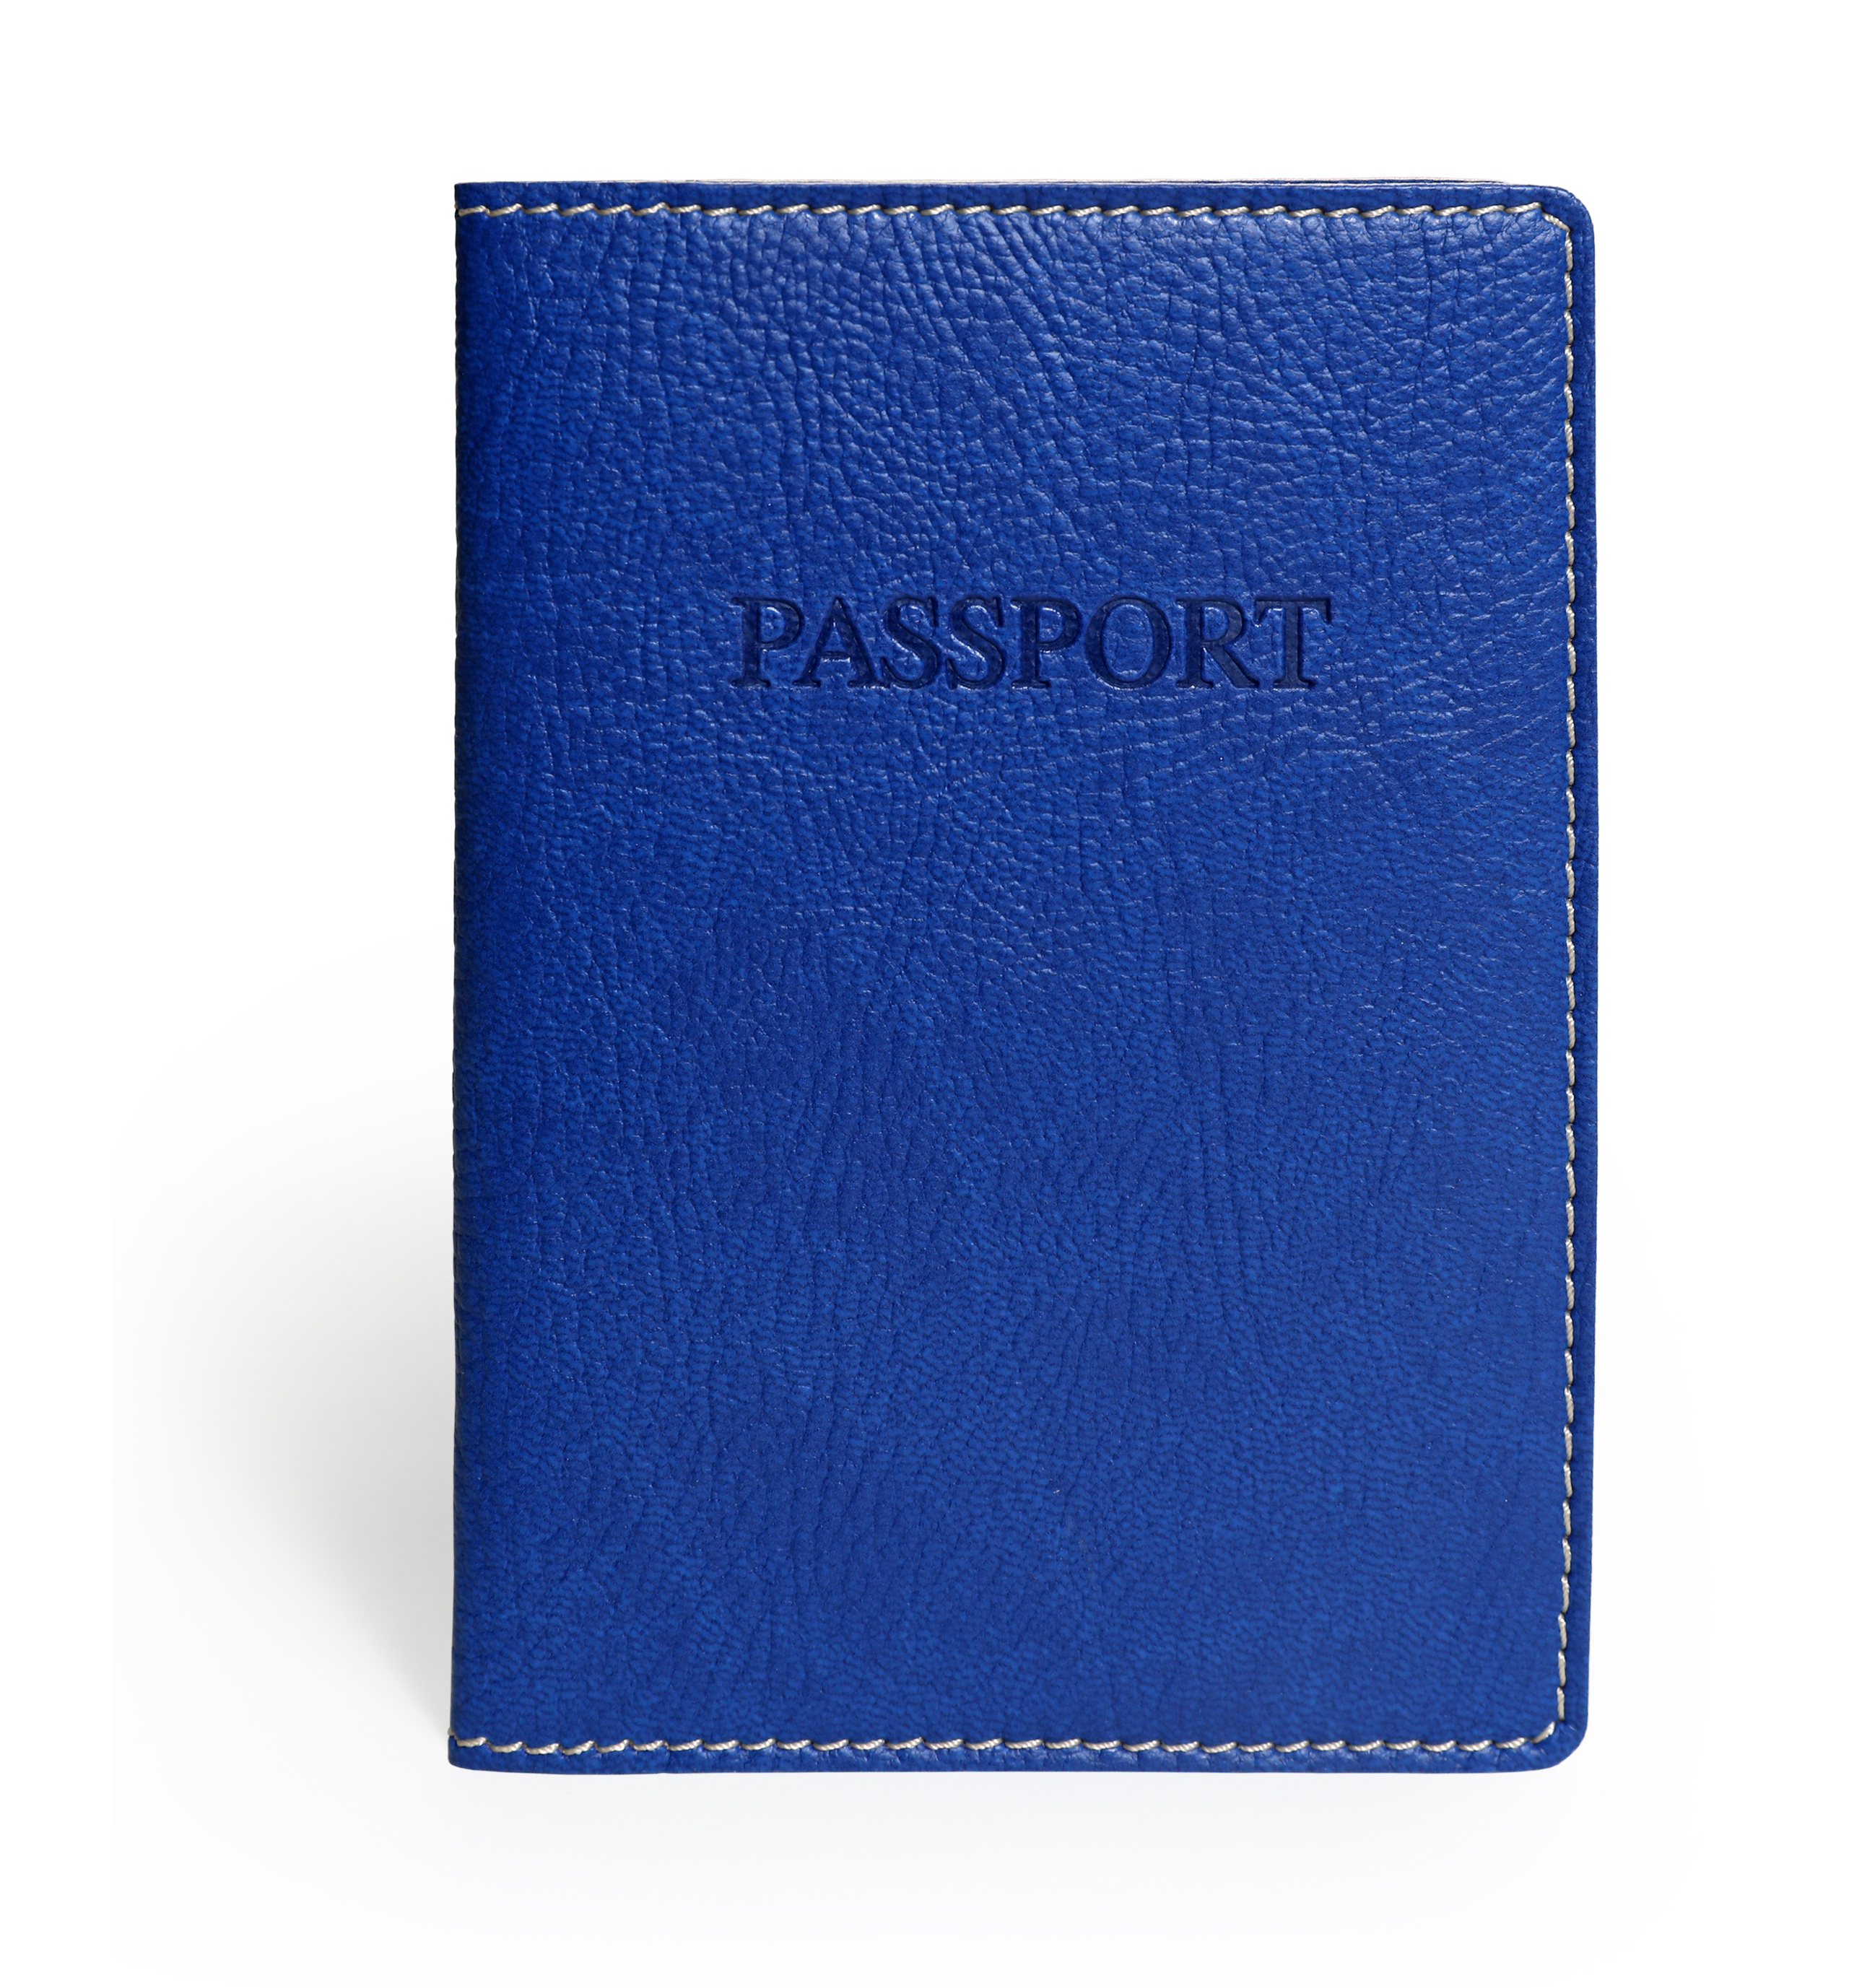 A4077-BL - Passport Cover